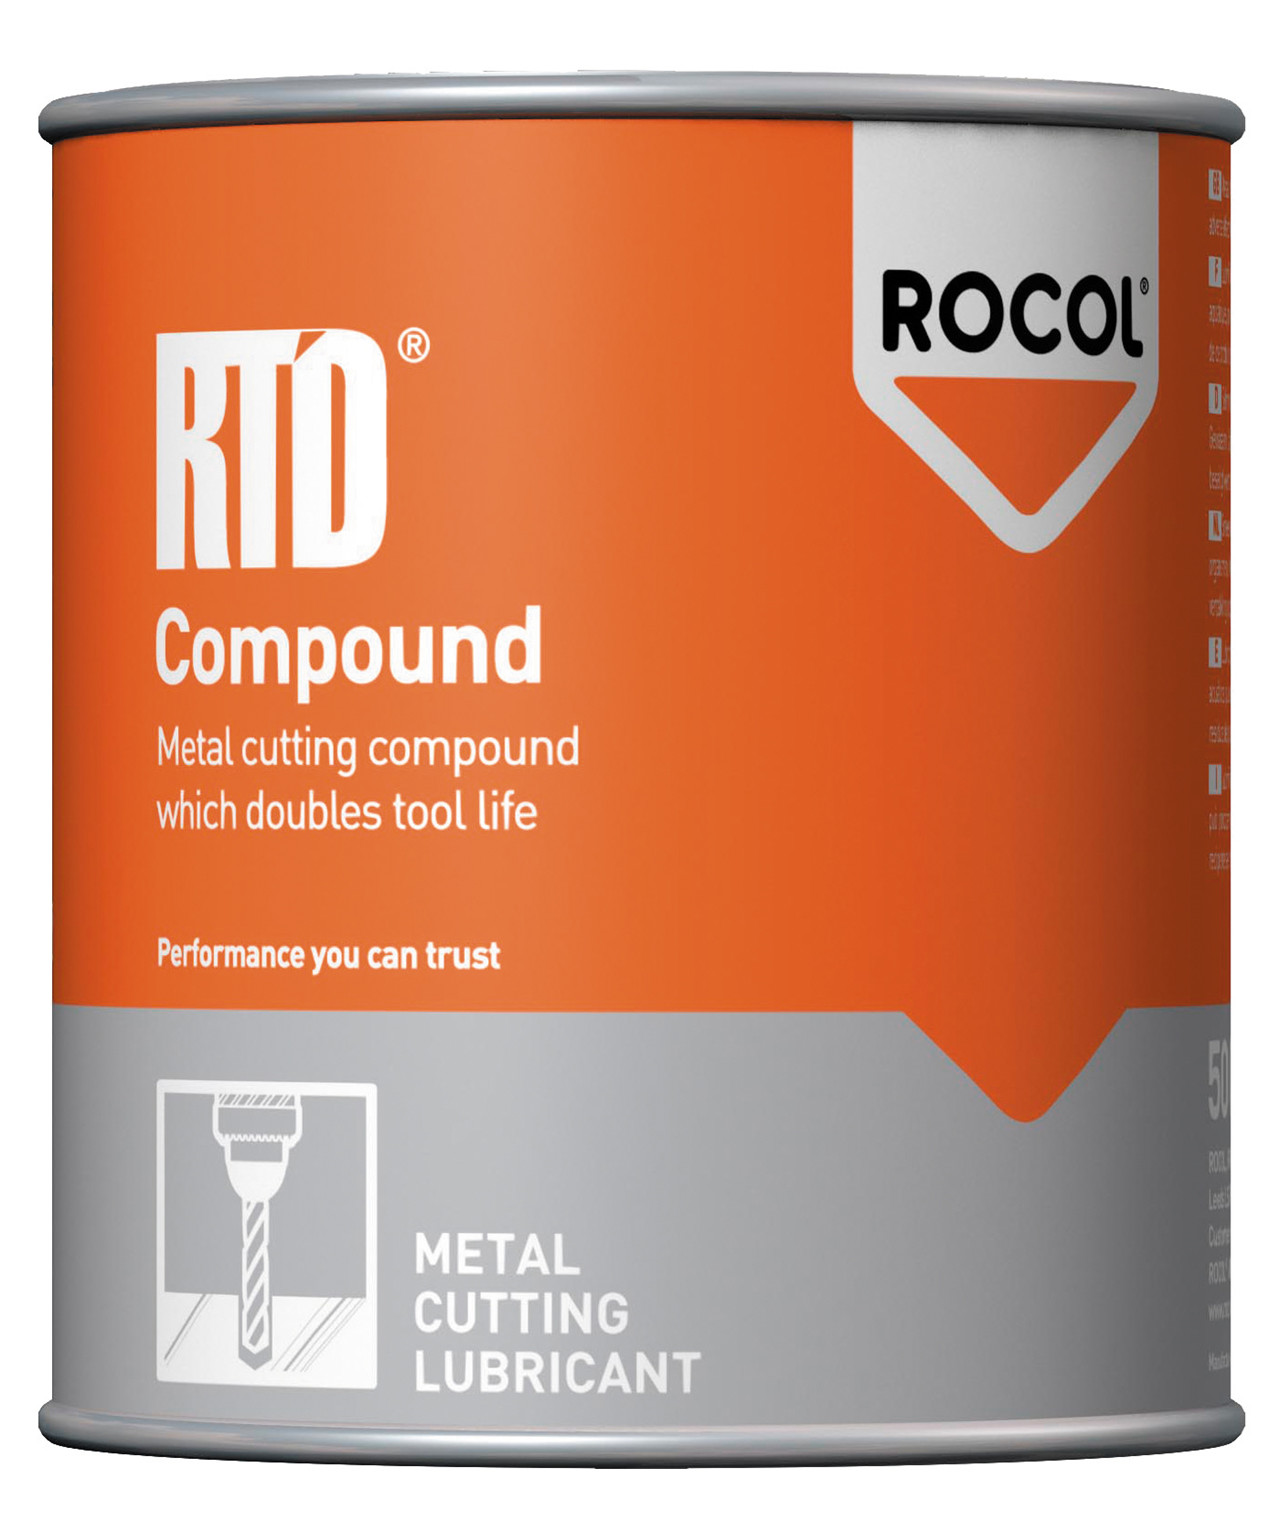 Se Rocol RTD Compound skærepasta hos Specialbutikken